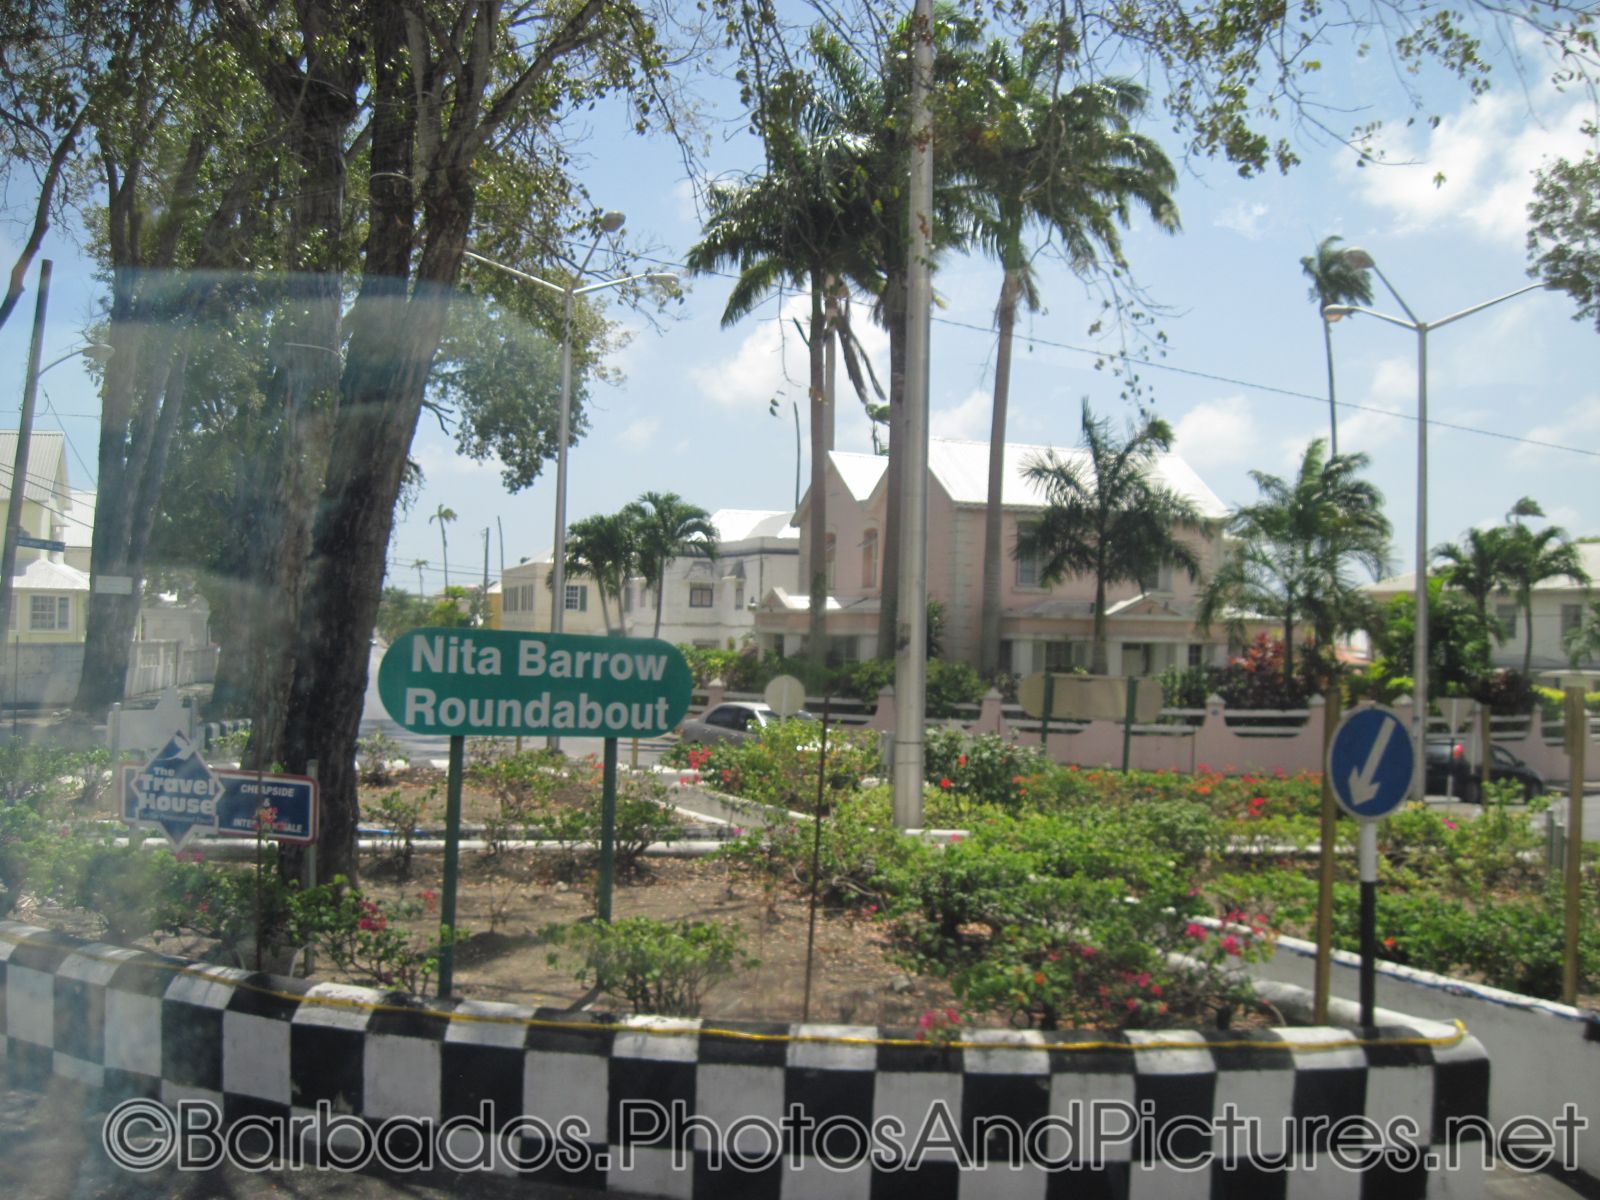 Nita Barrow Roundabout in Barbados.jpg
